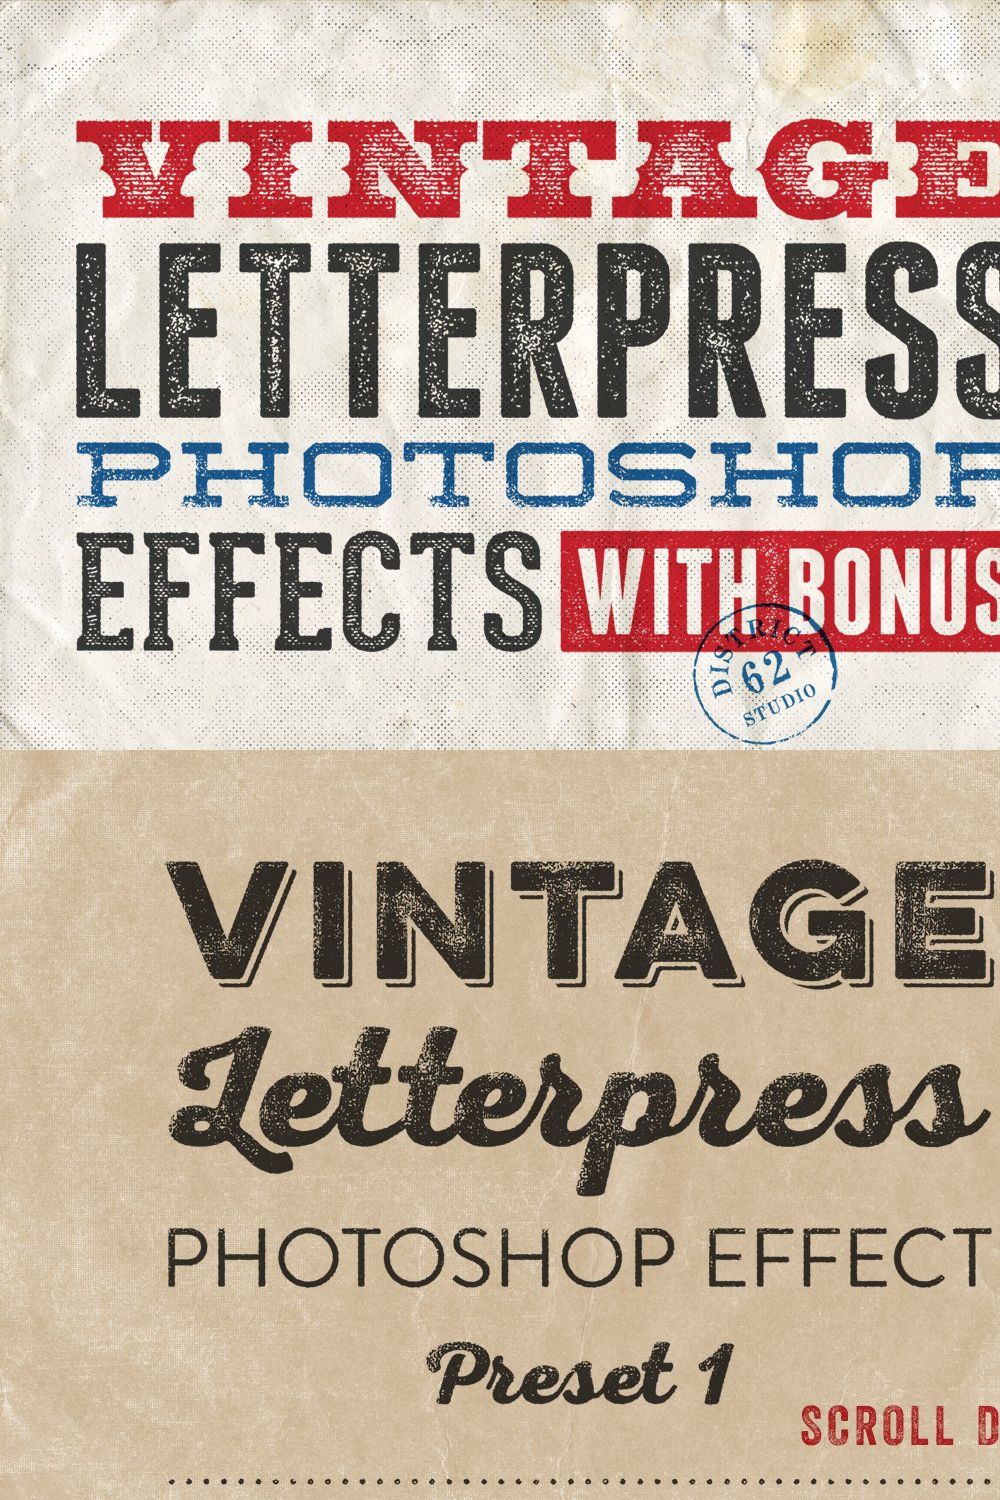 Letterpress Photoshop Effects pinterest preview image.